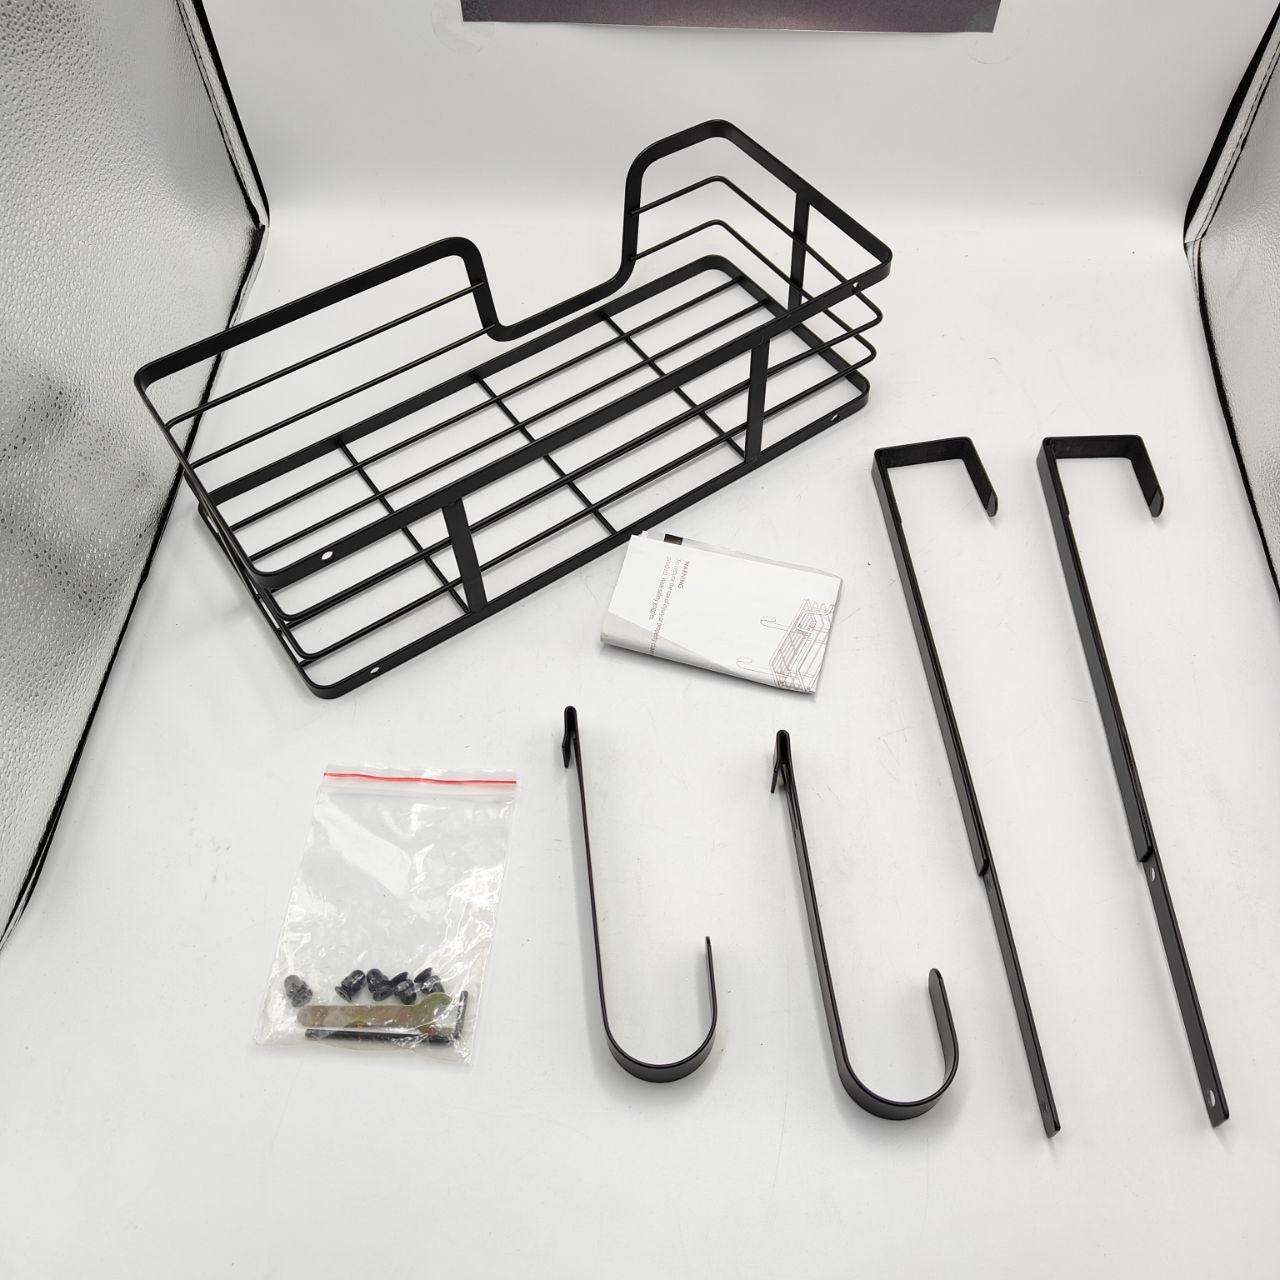 KES Ironing Board Hanger with Metal Basket and Adjustable Hooks, Over Door